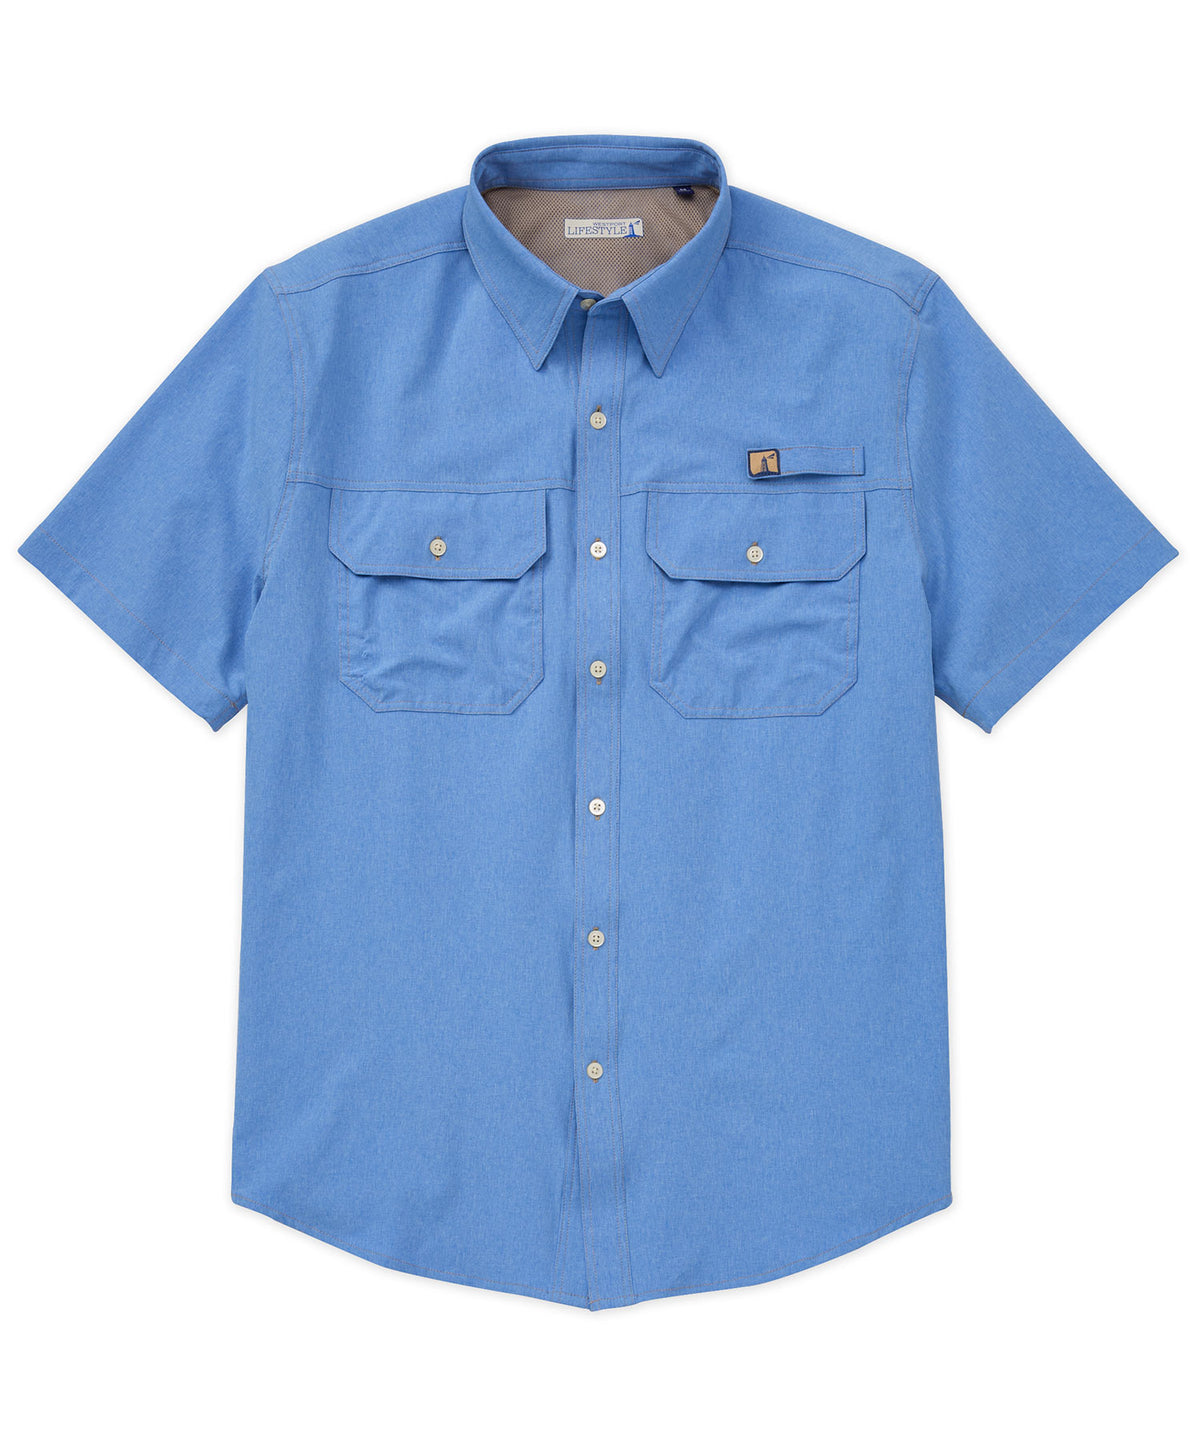 Westport Lifestyle Short Sleeve Saugatuck Fishing Shirt, Men's Big & Tall